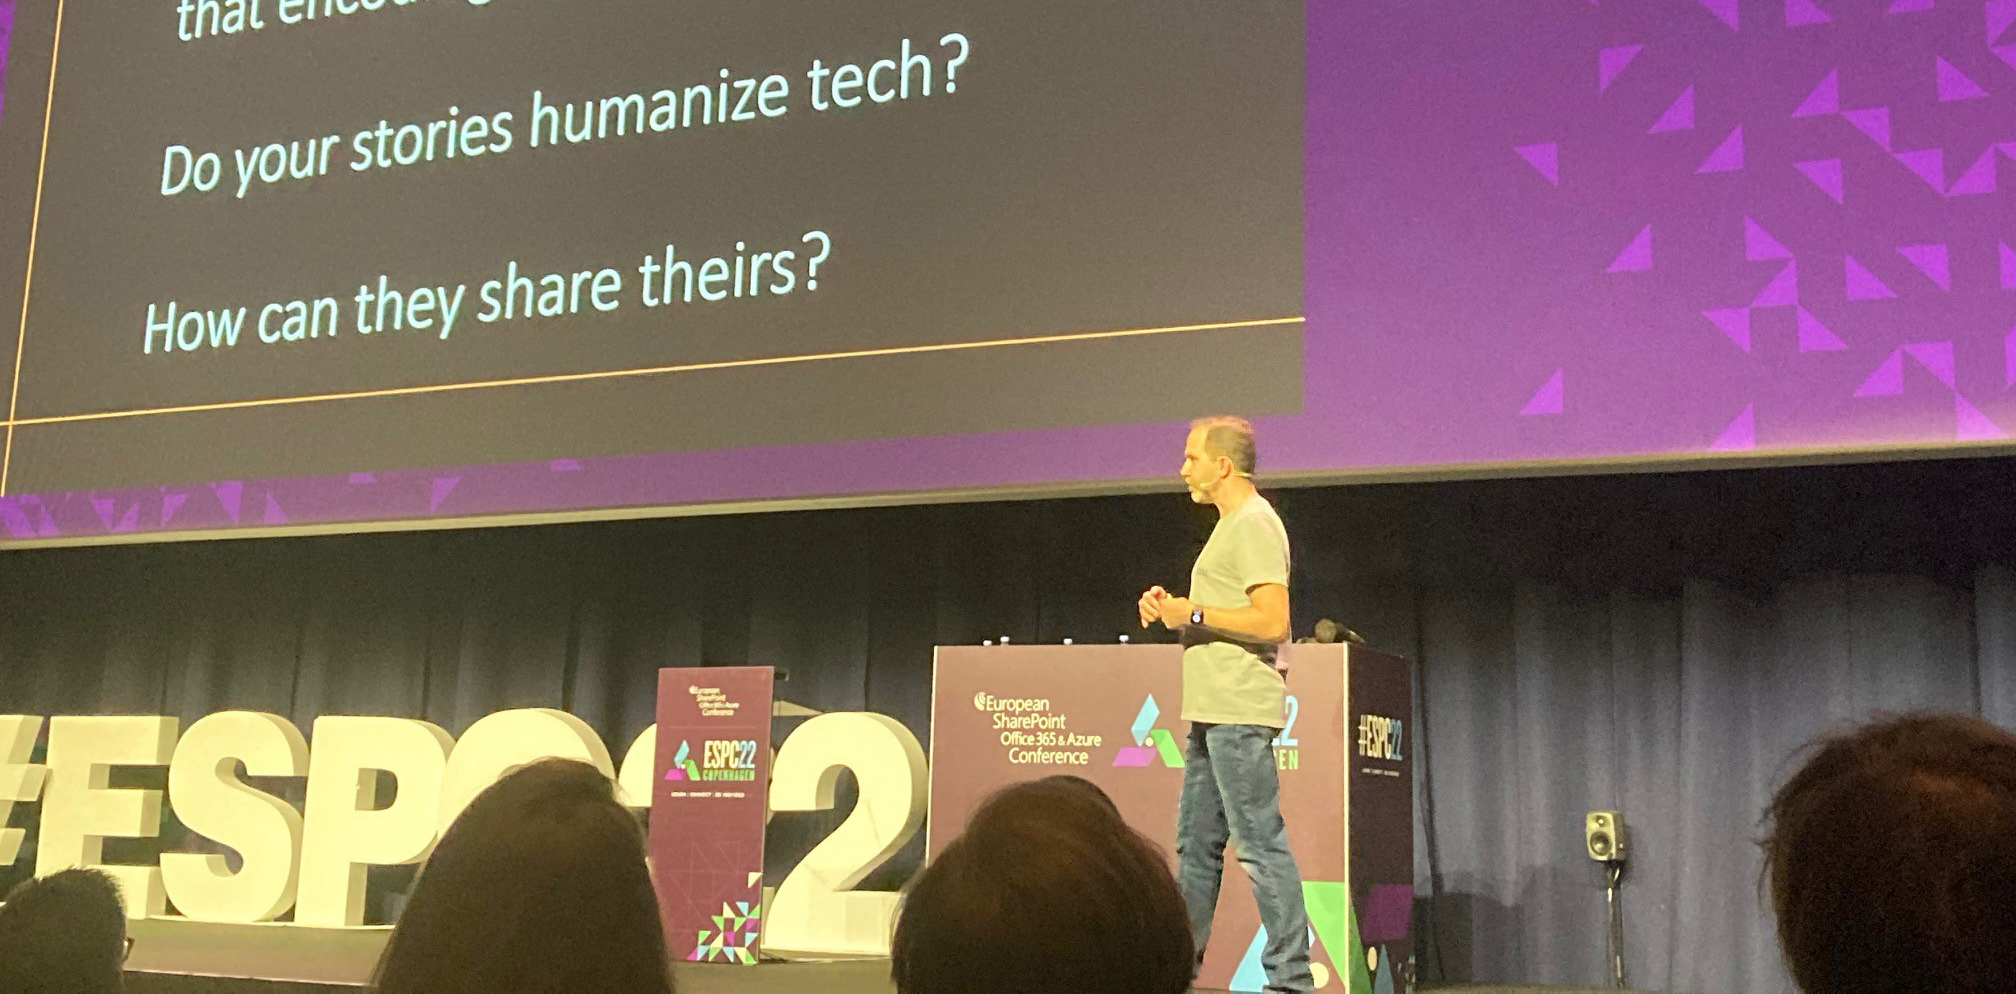 humanize tech